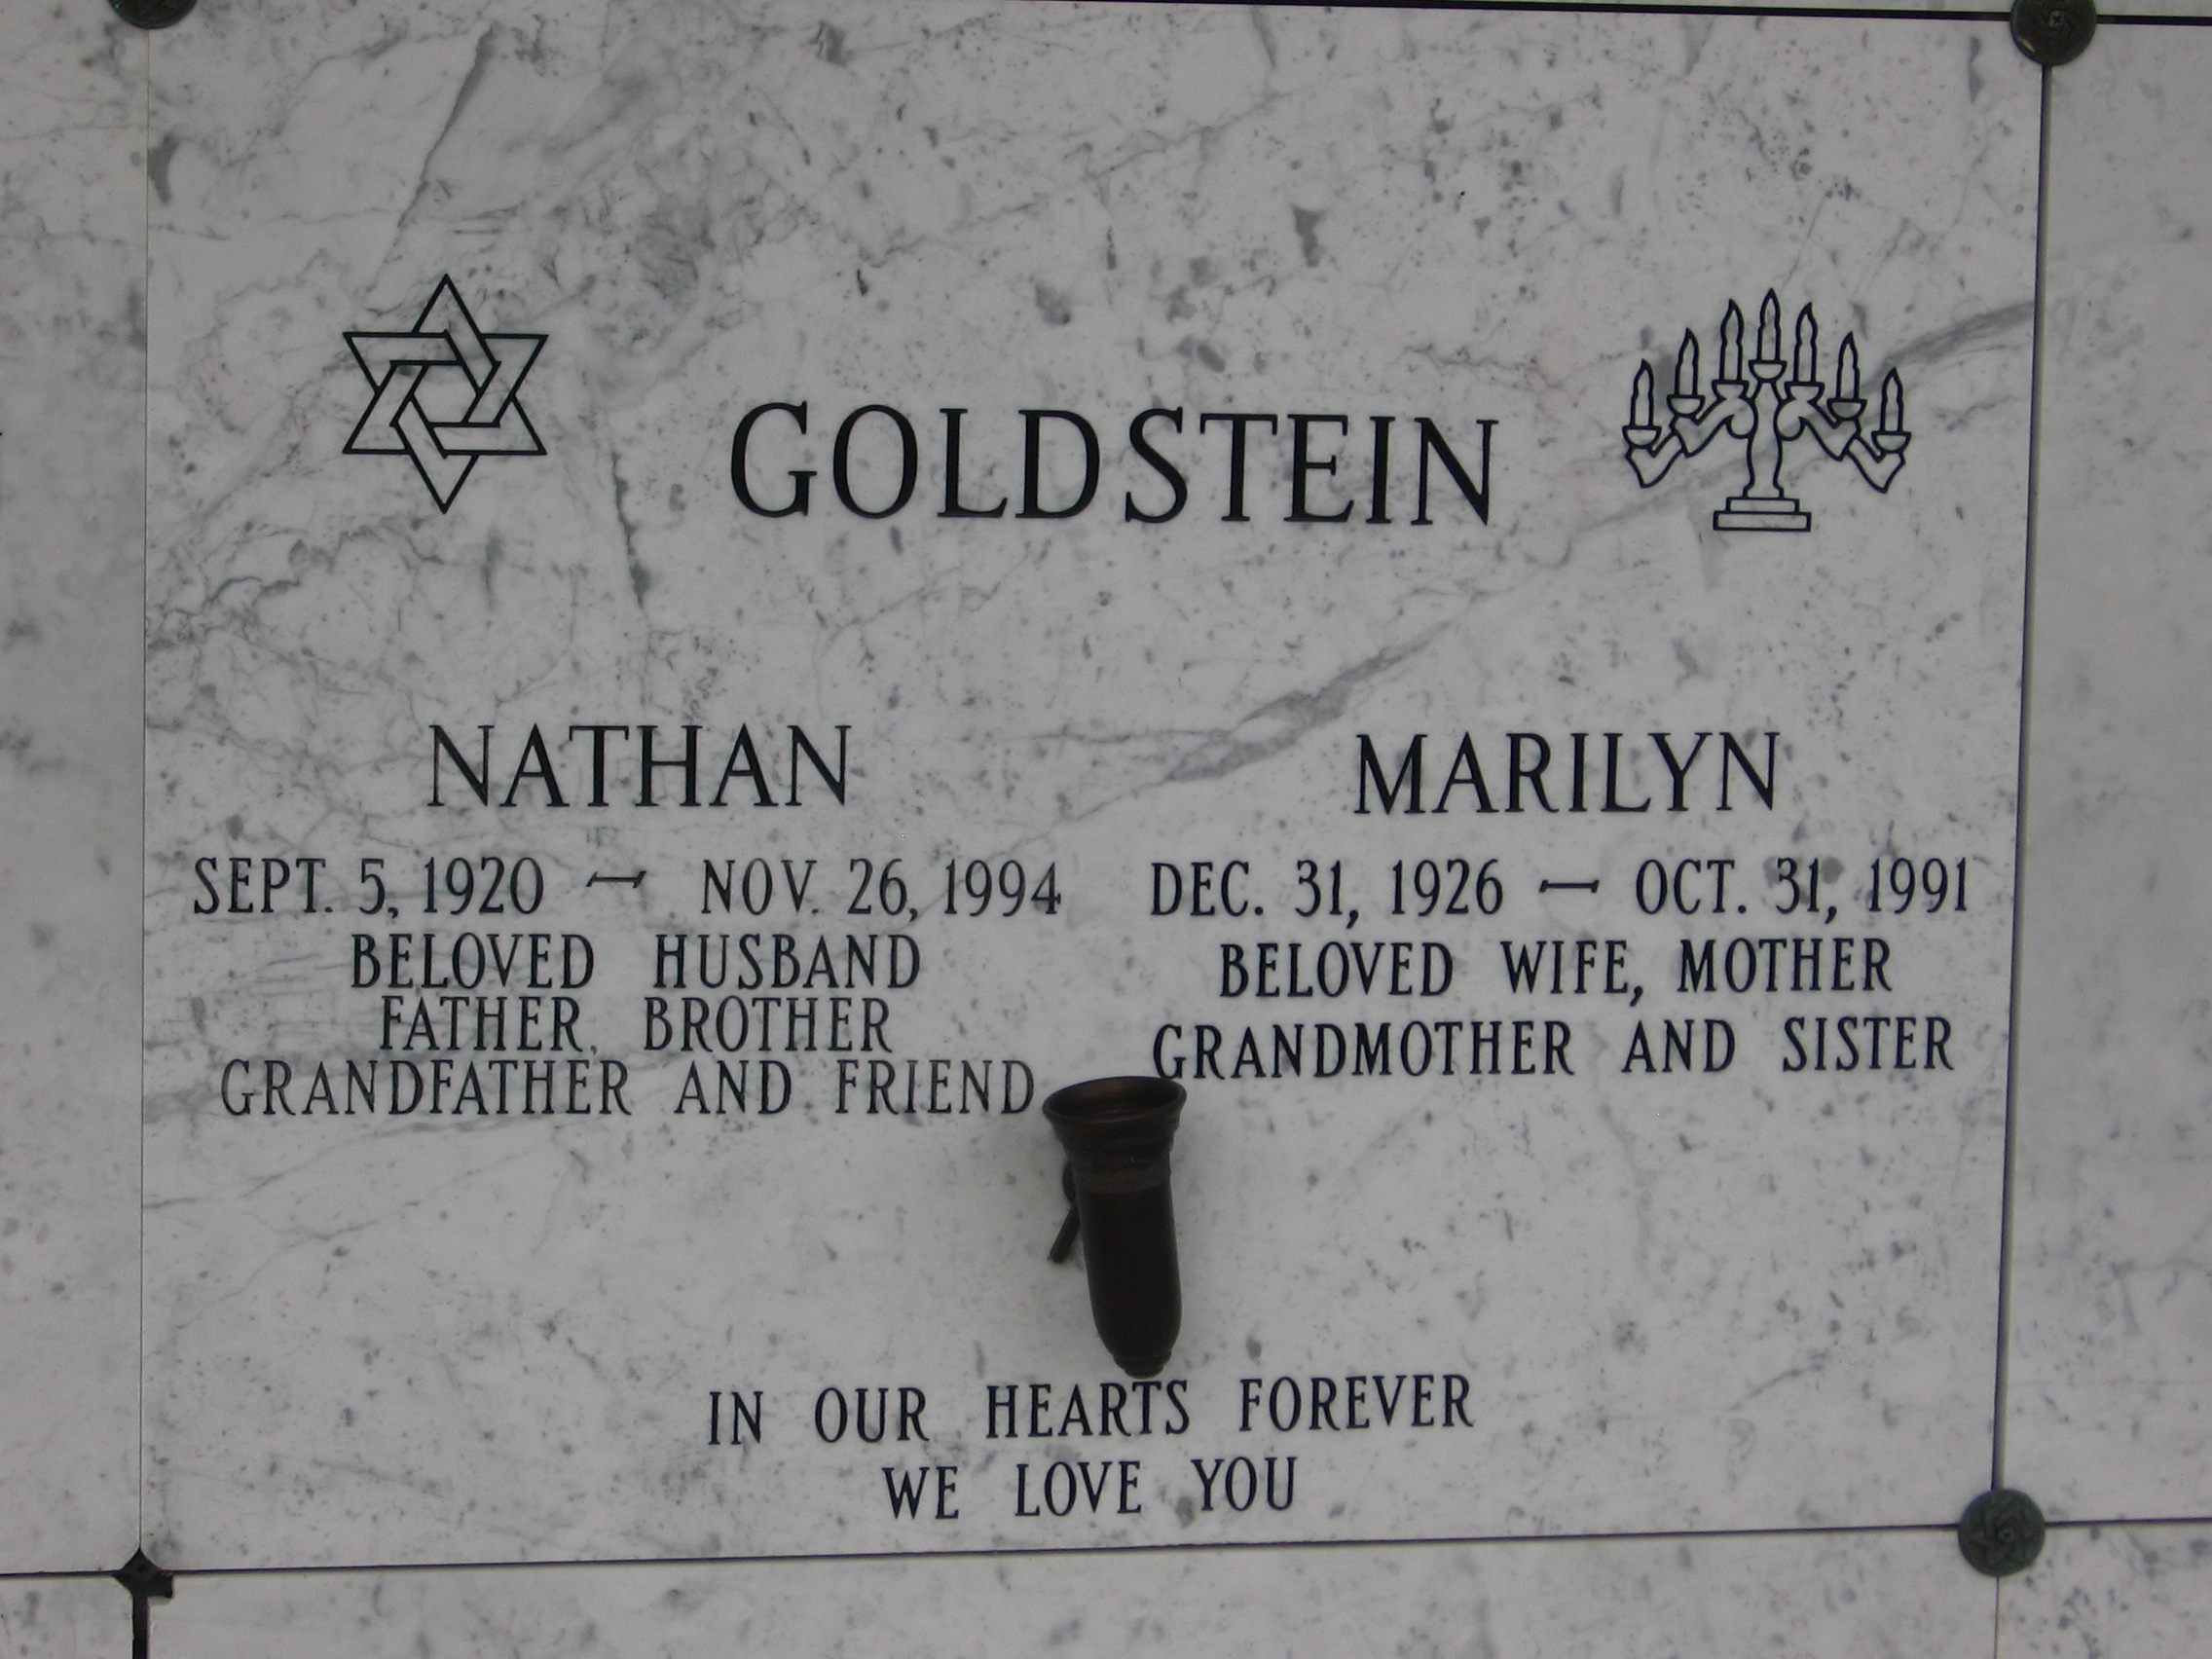 Marilyn Goldstein